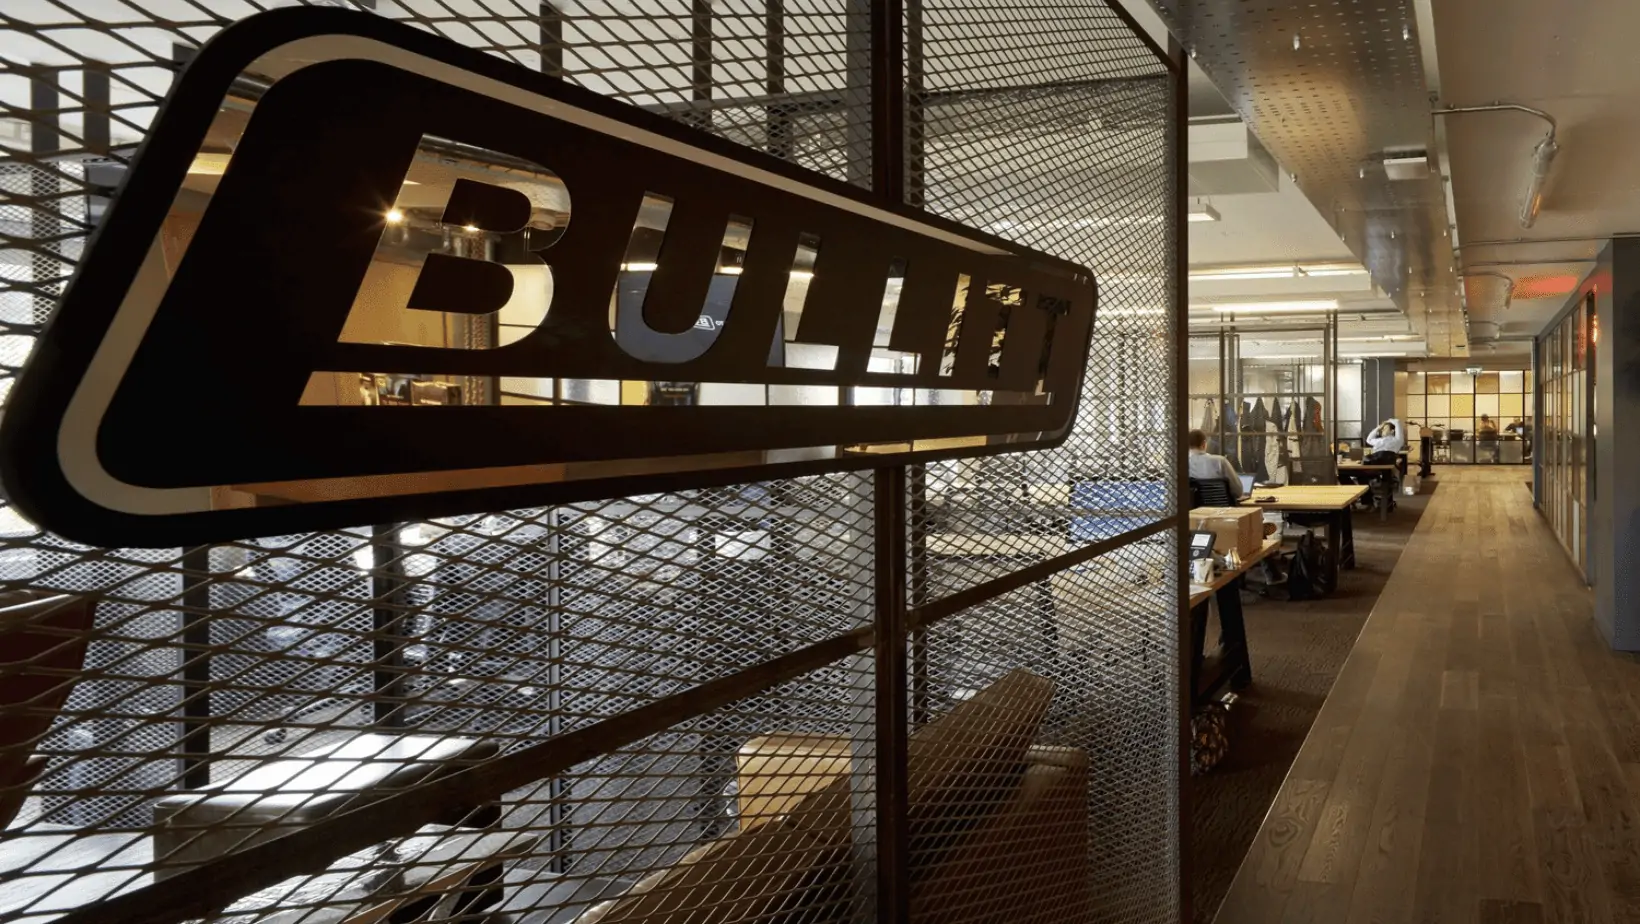 Bullitt Group, Manufacturer of Rugged Smartphones, Closes Amid Financial Struggles